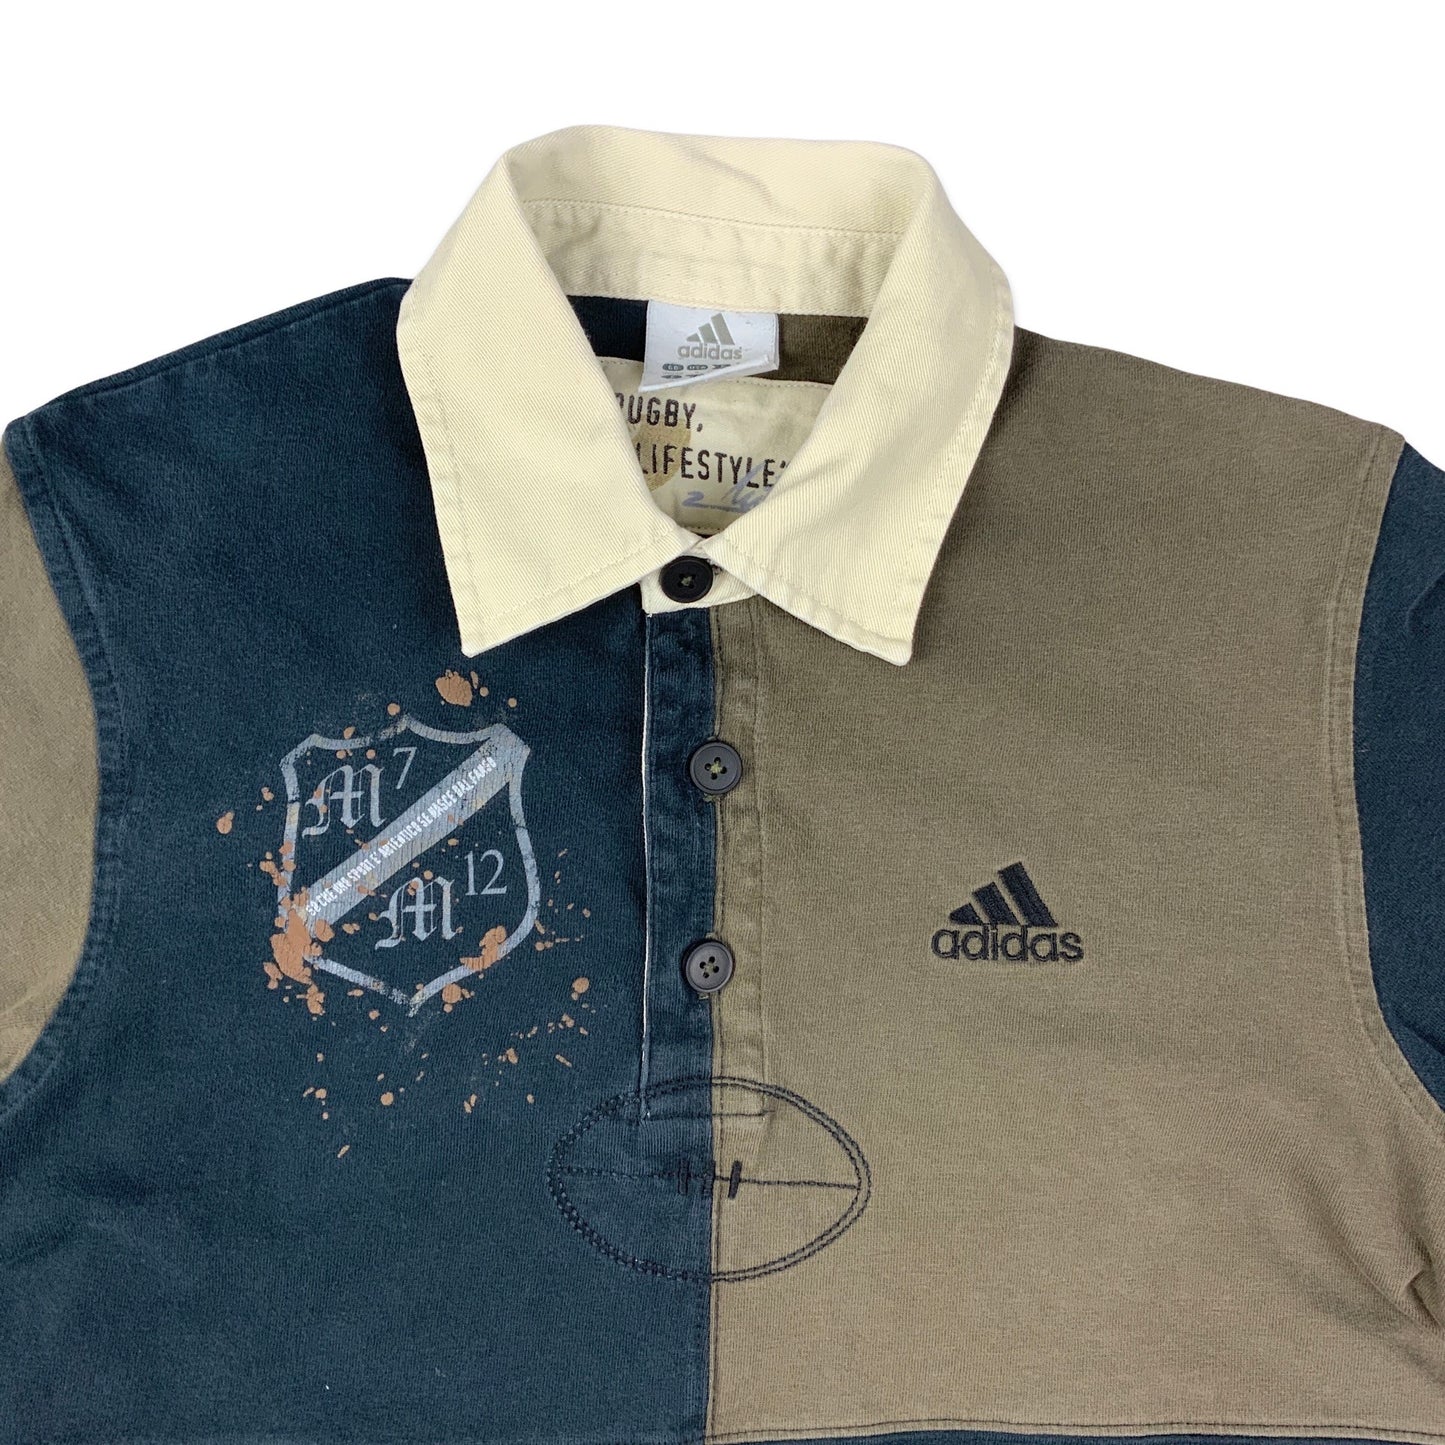 Vintage Adidas Navy & Khaki Rugby Shirt XS S